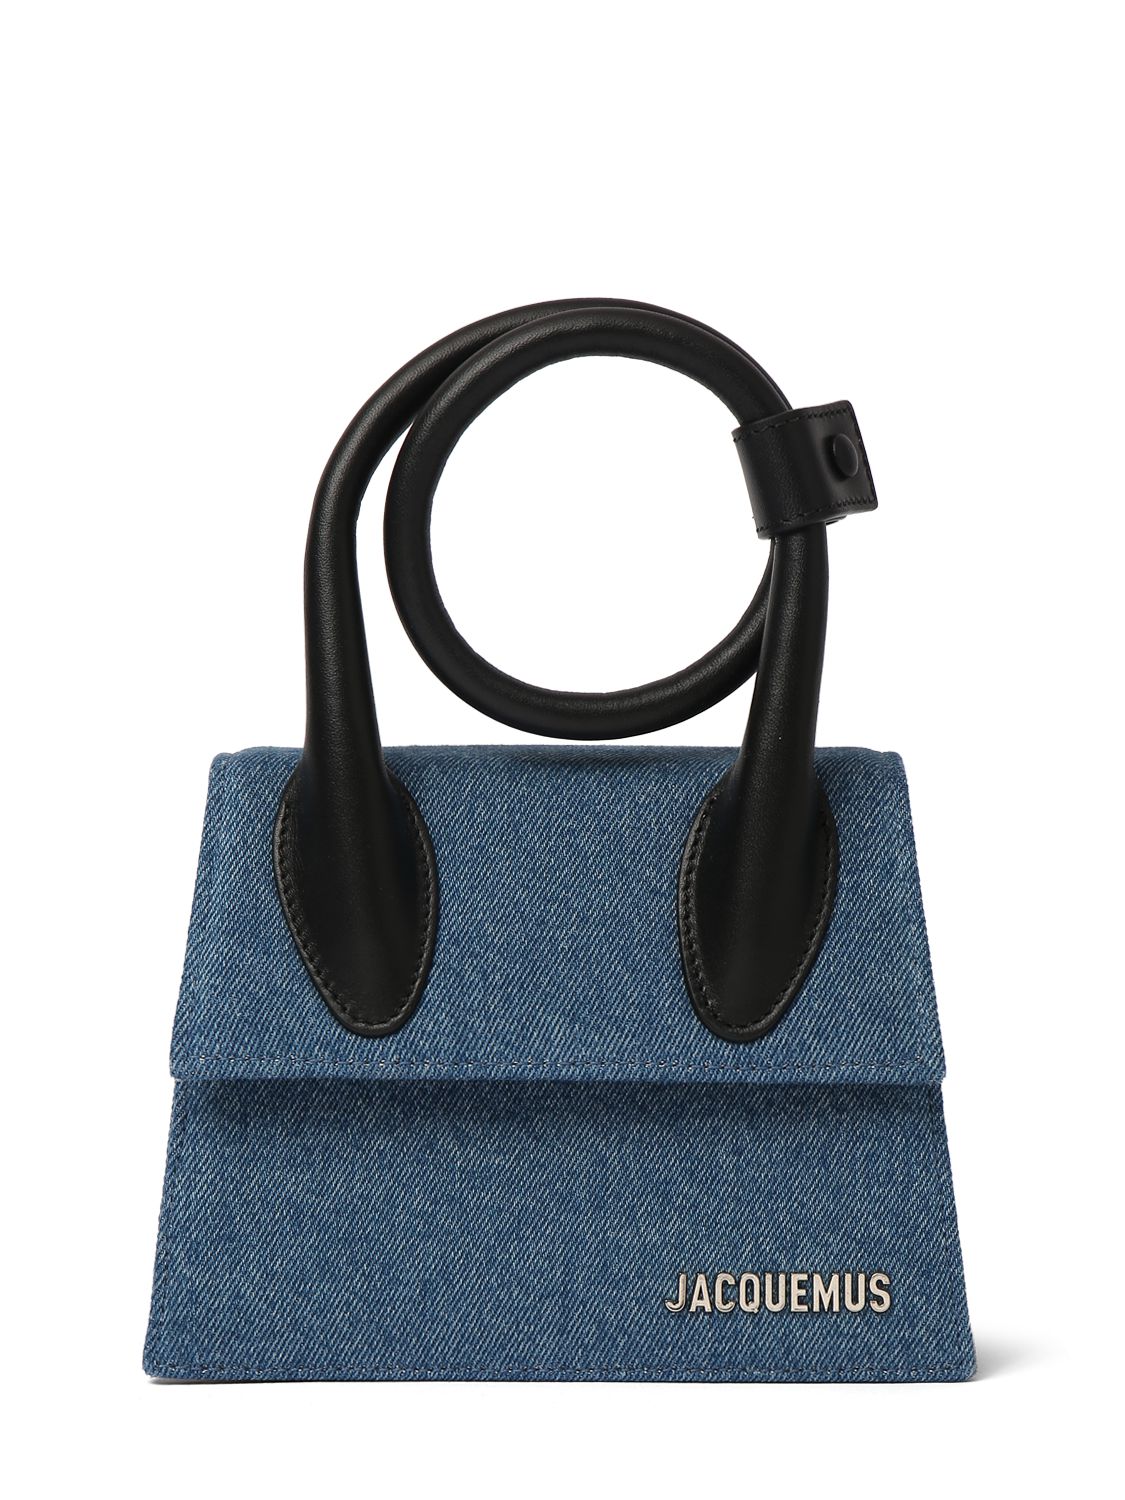 Jacquemus Le Chiquito Noeud Denim Top Handle Bag In Blue